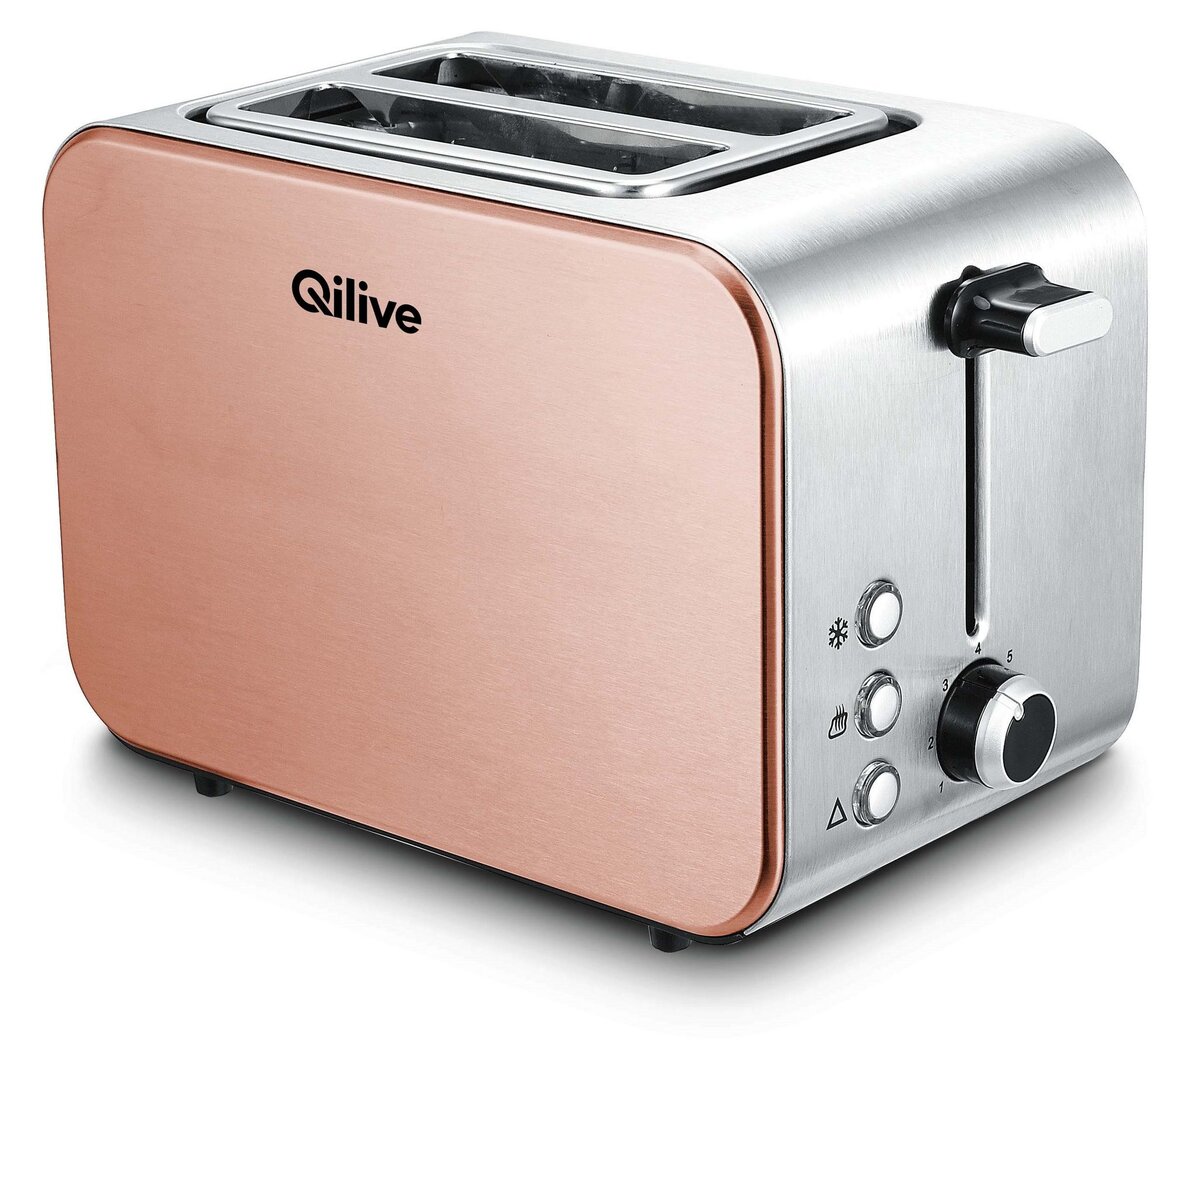 QILIVE Toaster Q.5329